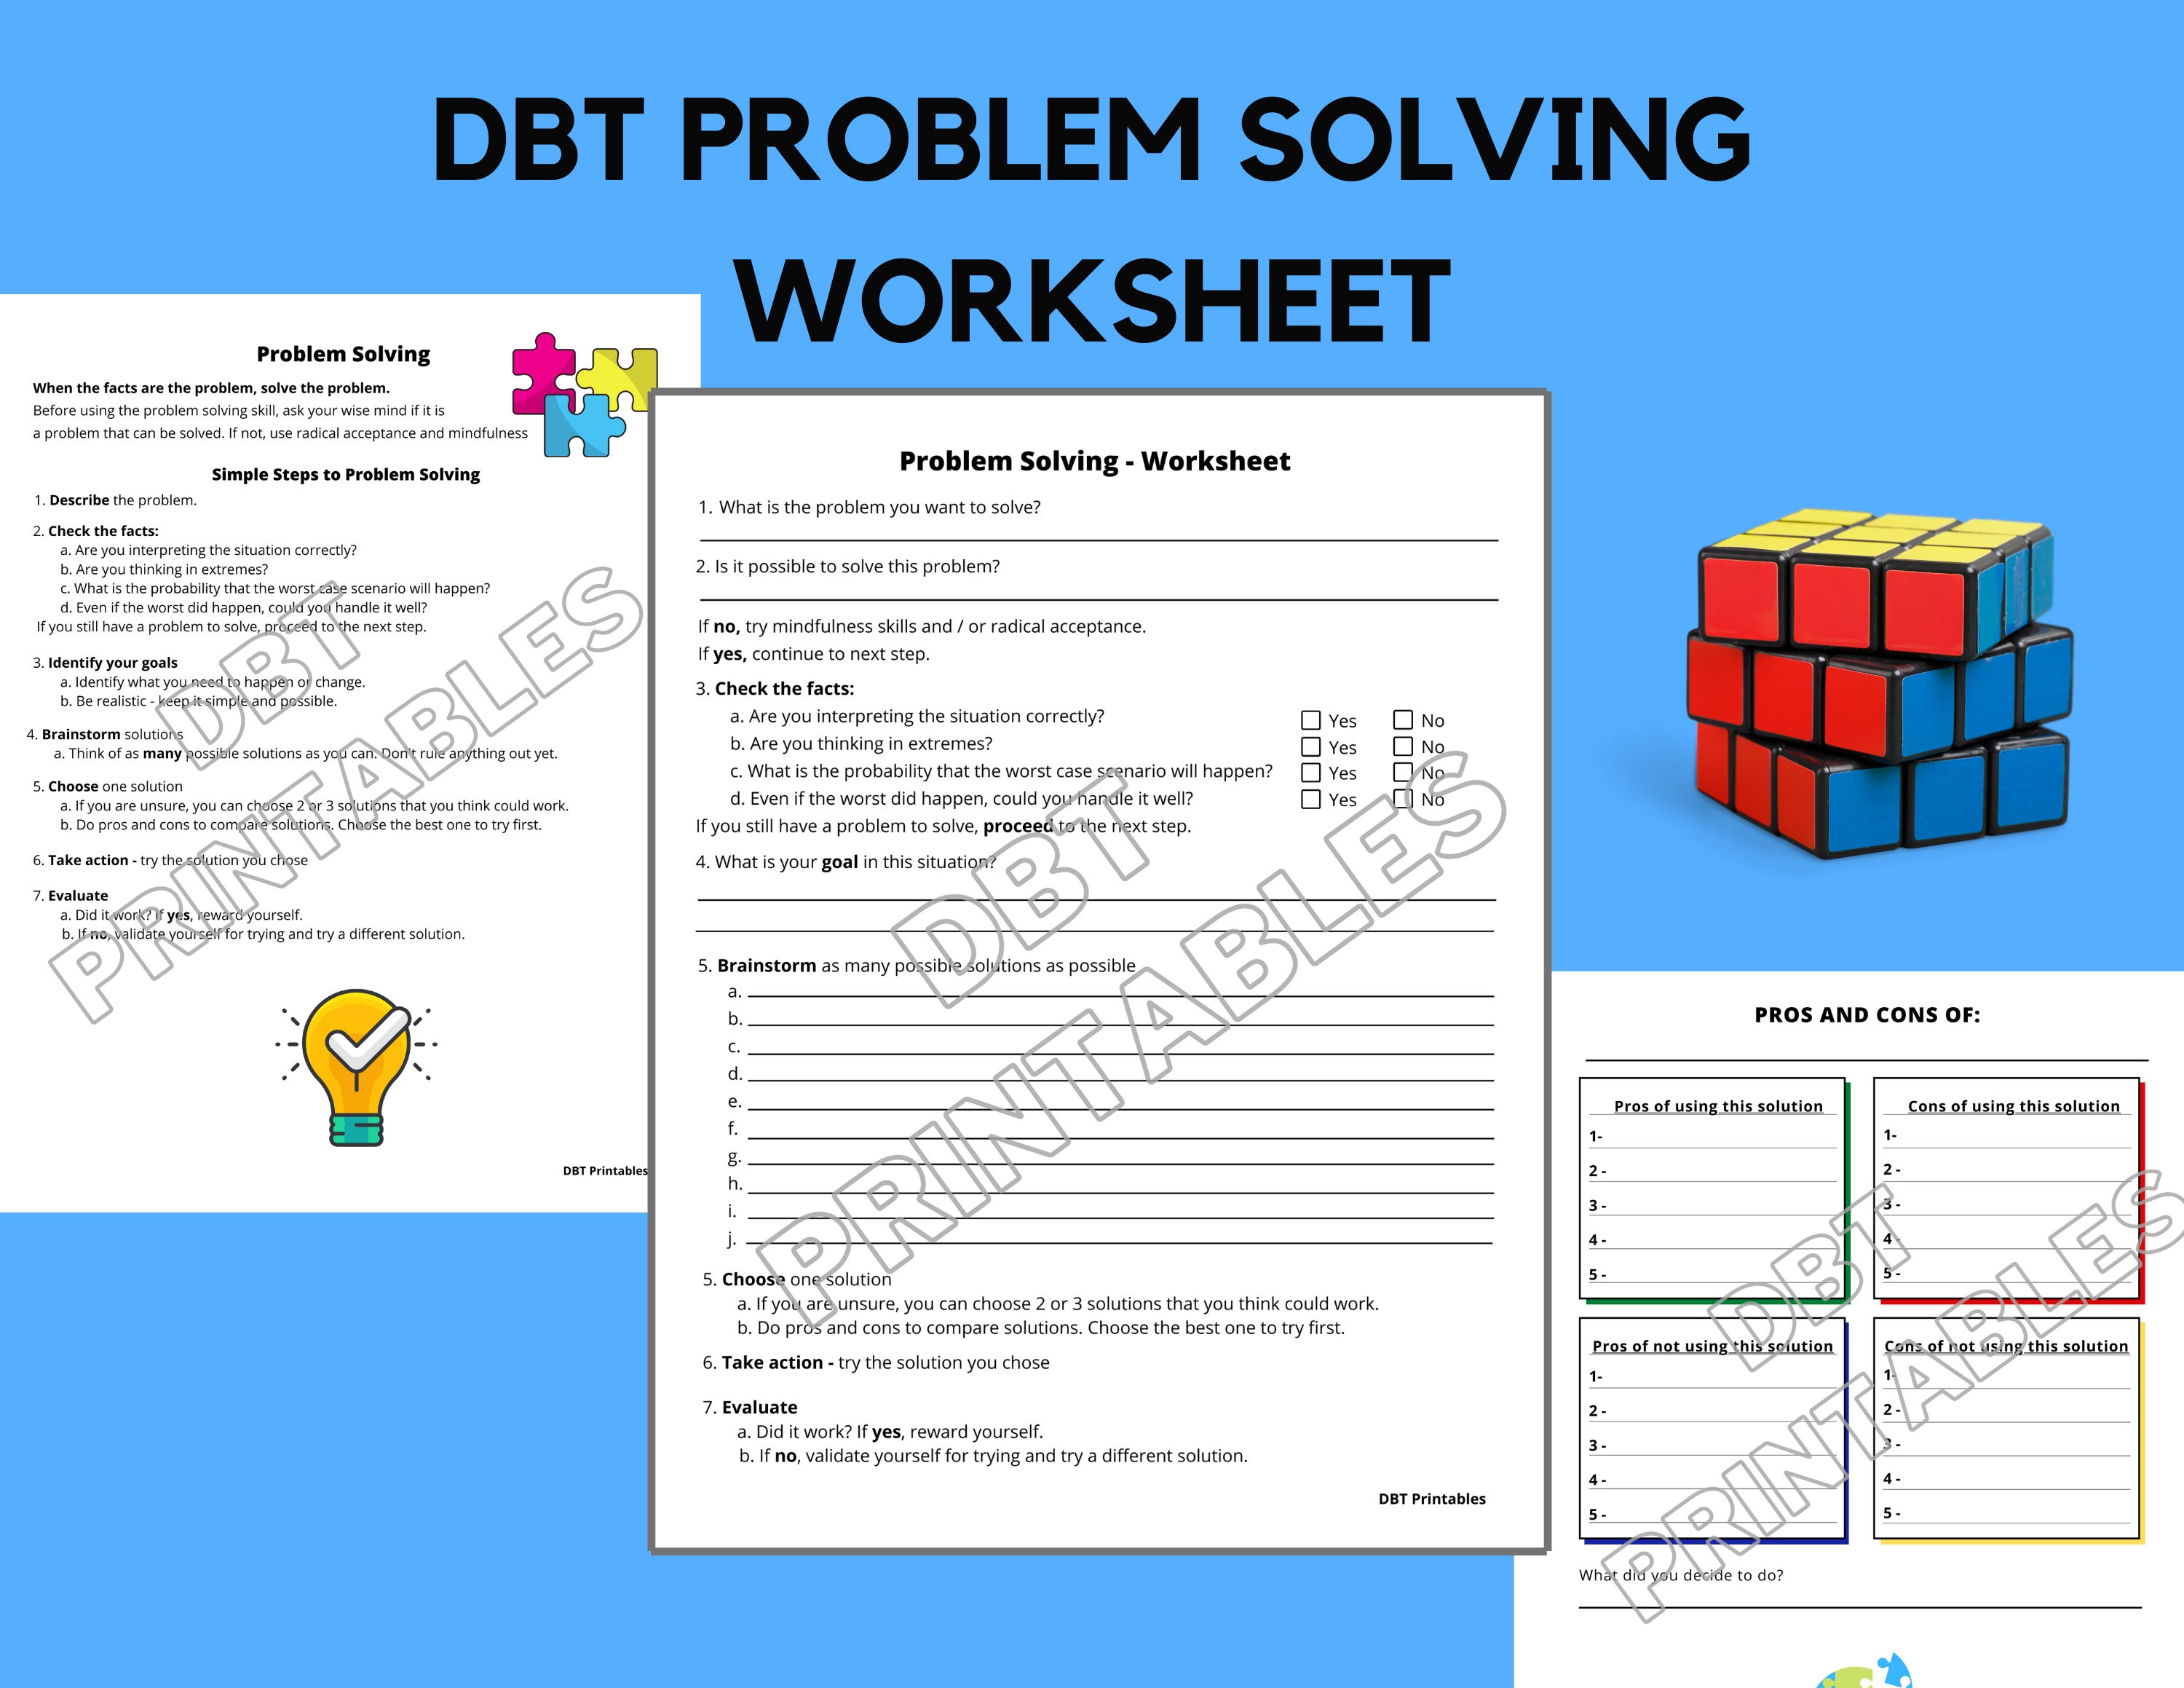 problem solving dbt steps